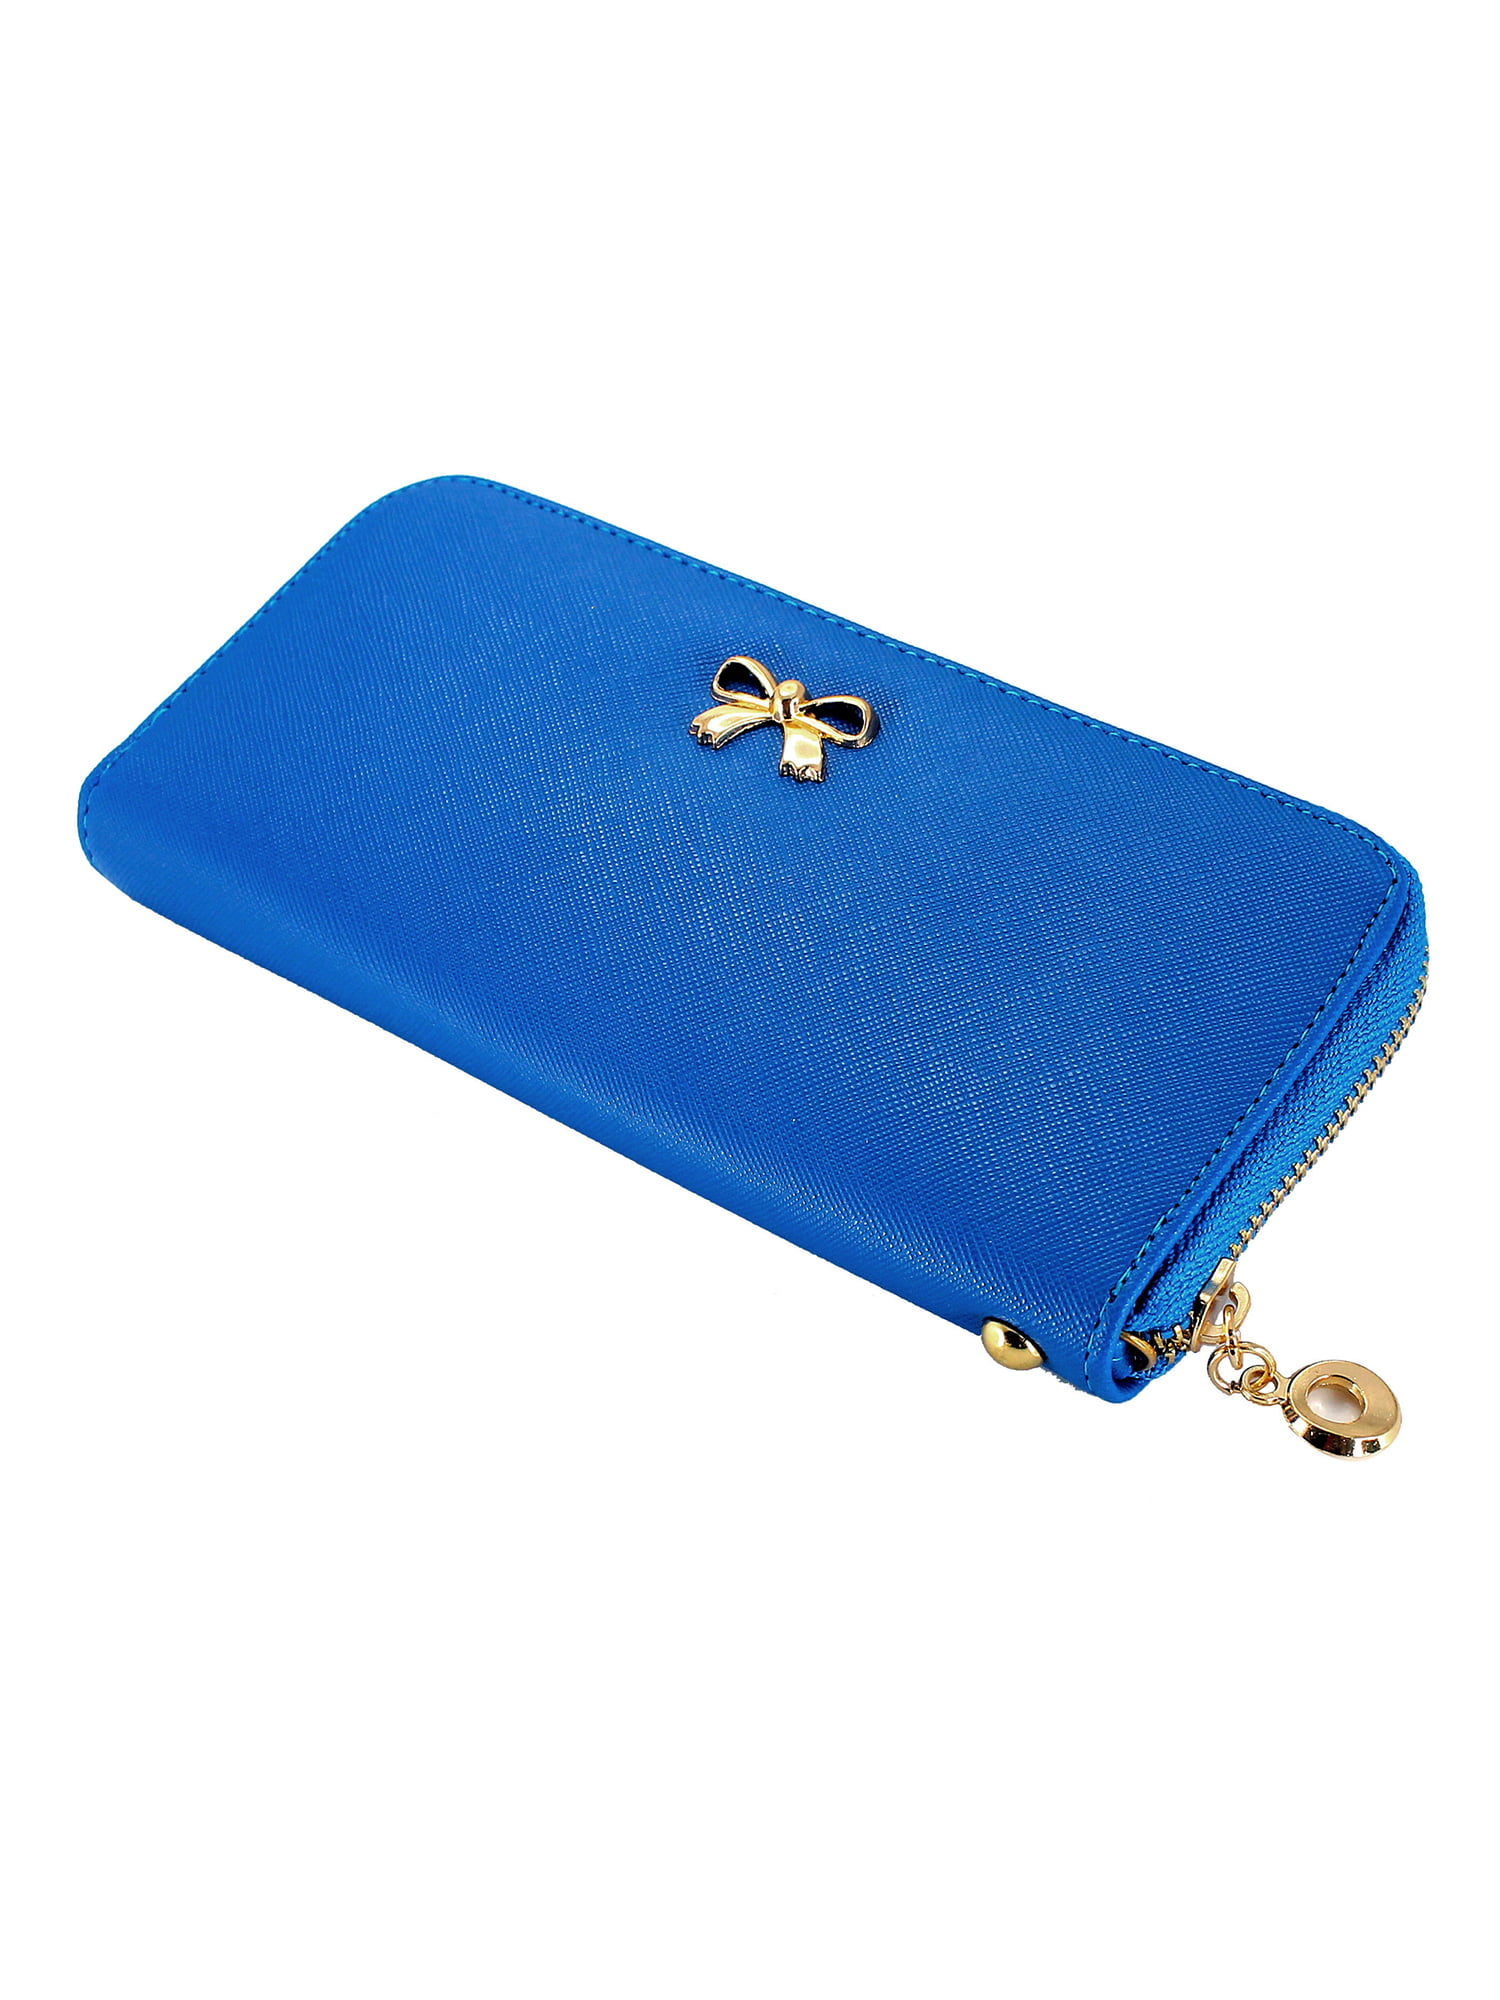 Fashion Lady Women Leather Clutch Wallet Zip Long Card Holder Case Purse Handbag